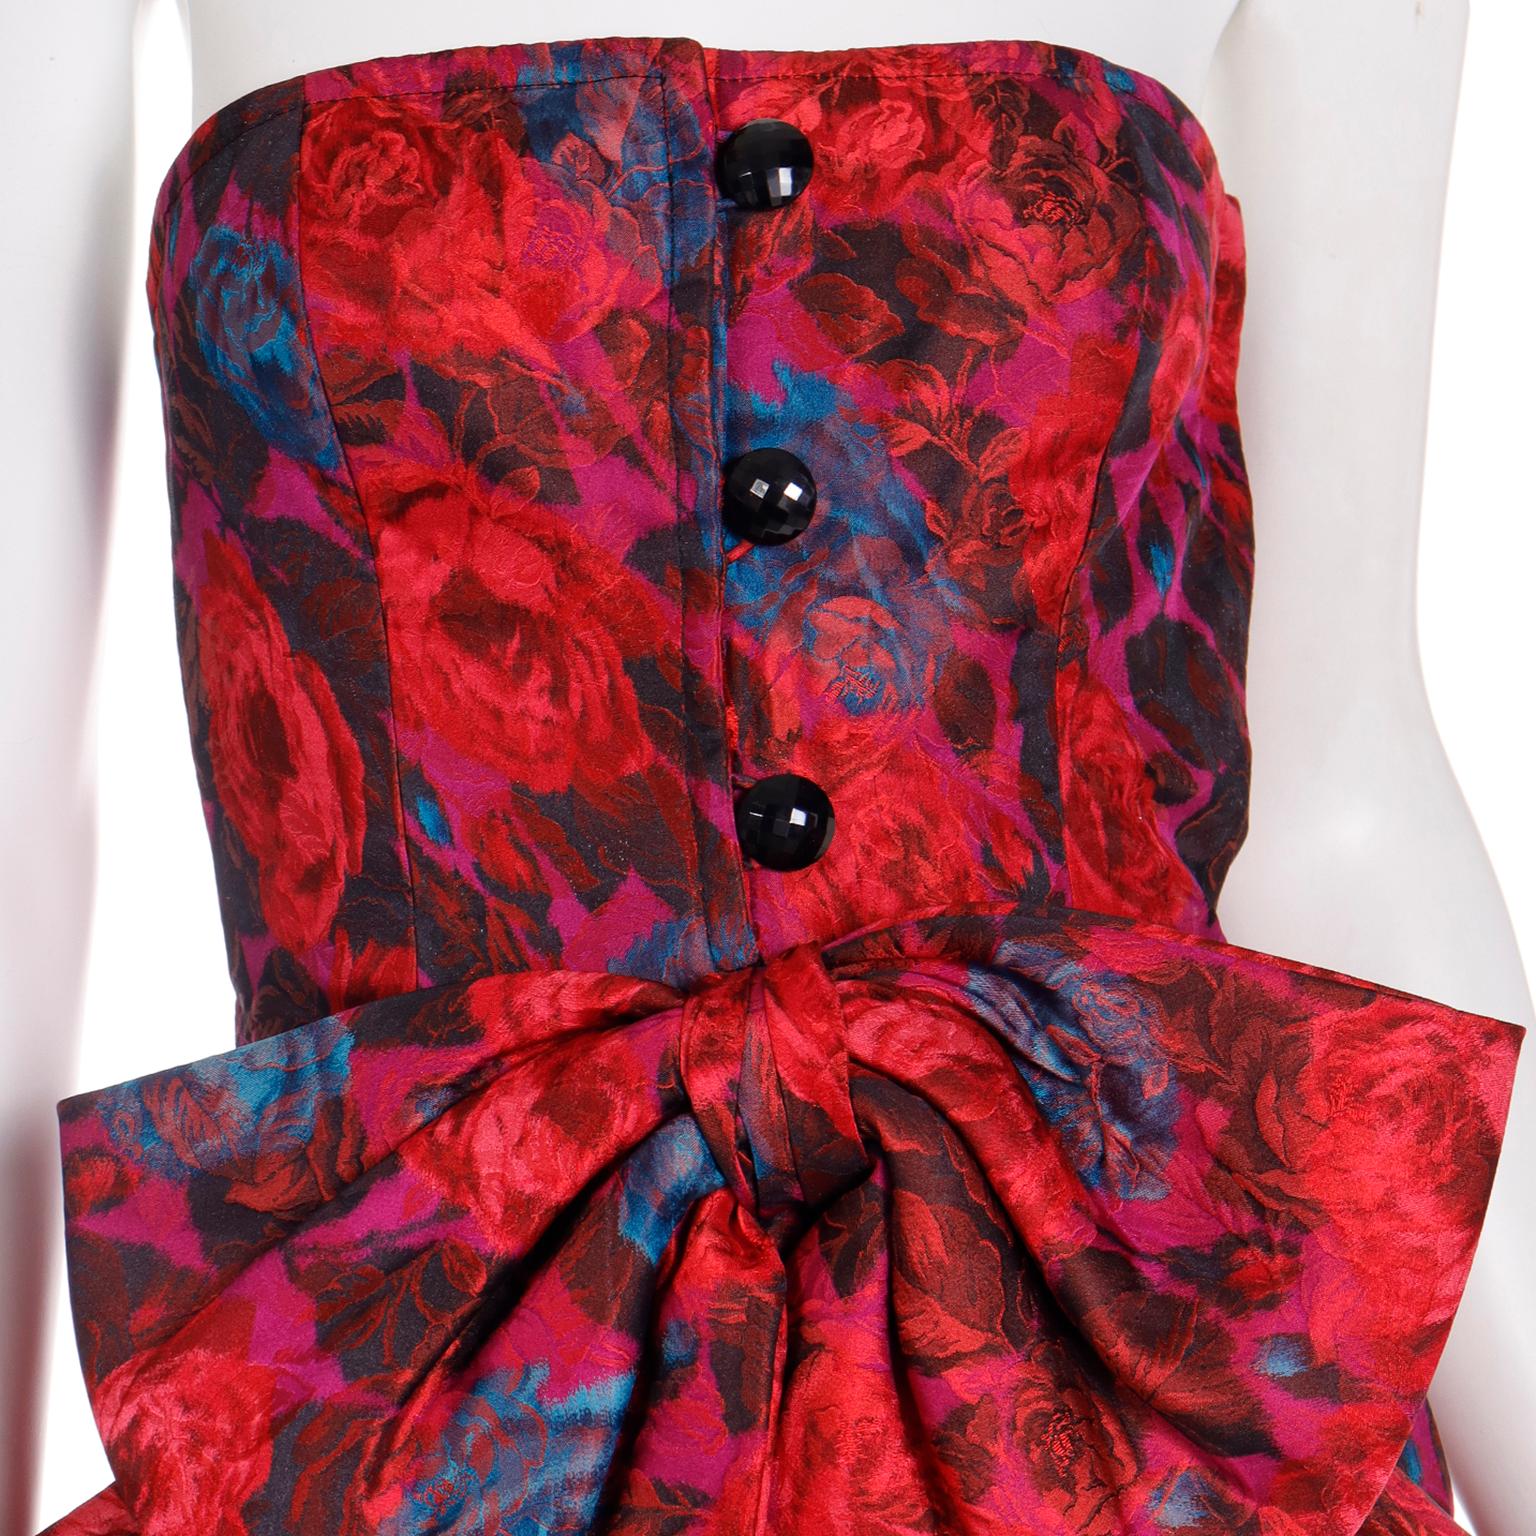 Odicini Couture Vintage Buntes trägerloses Vintage-Minikleid mit Blumenmuster in Rot, Lila & Blau im Angebot 4